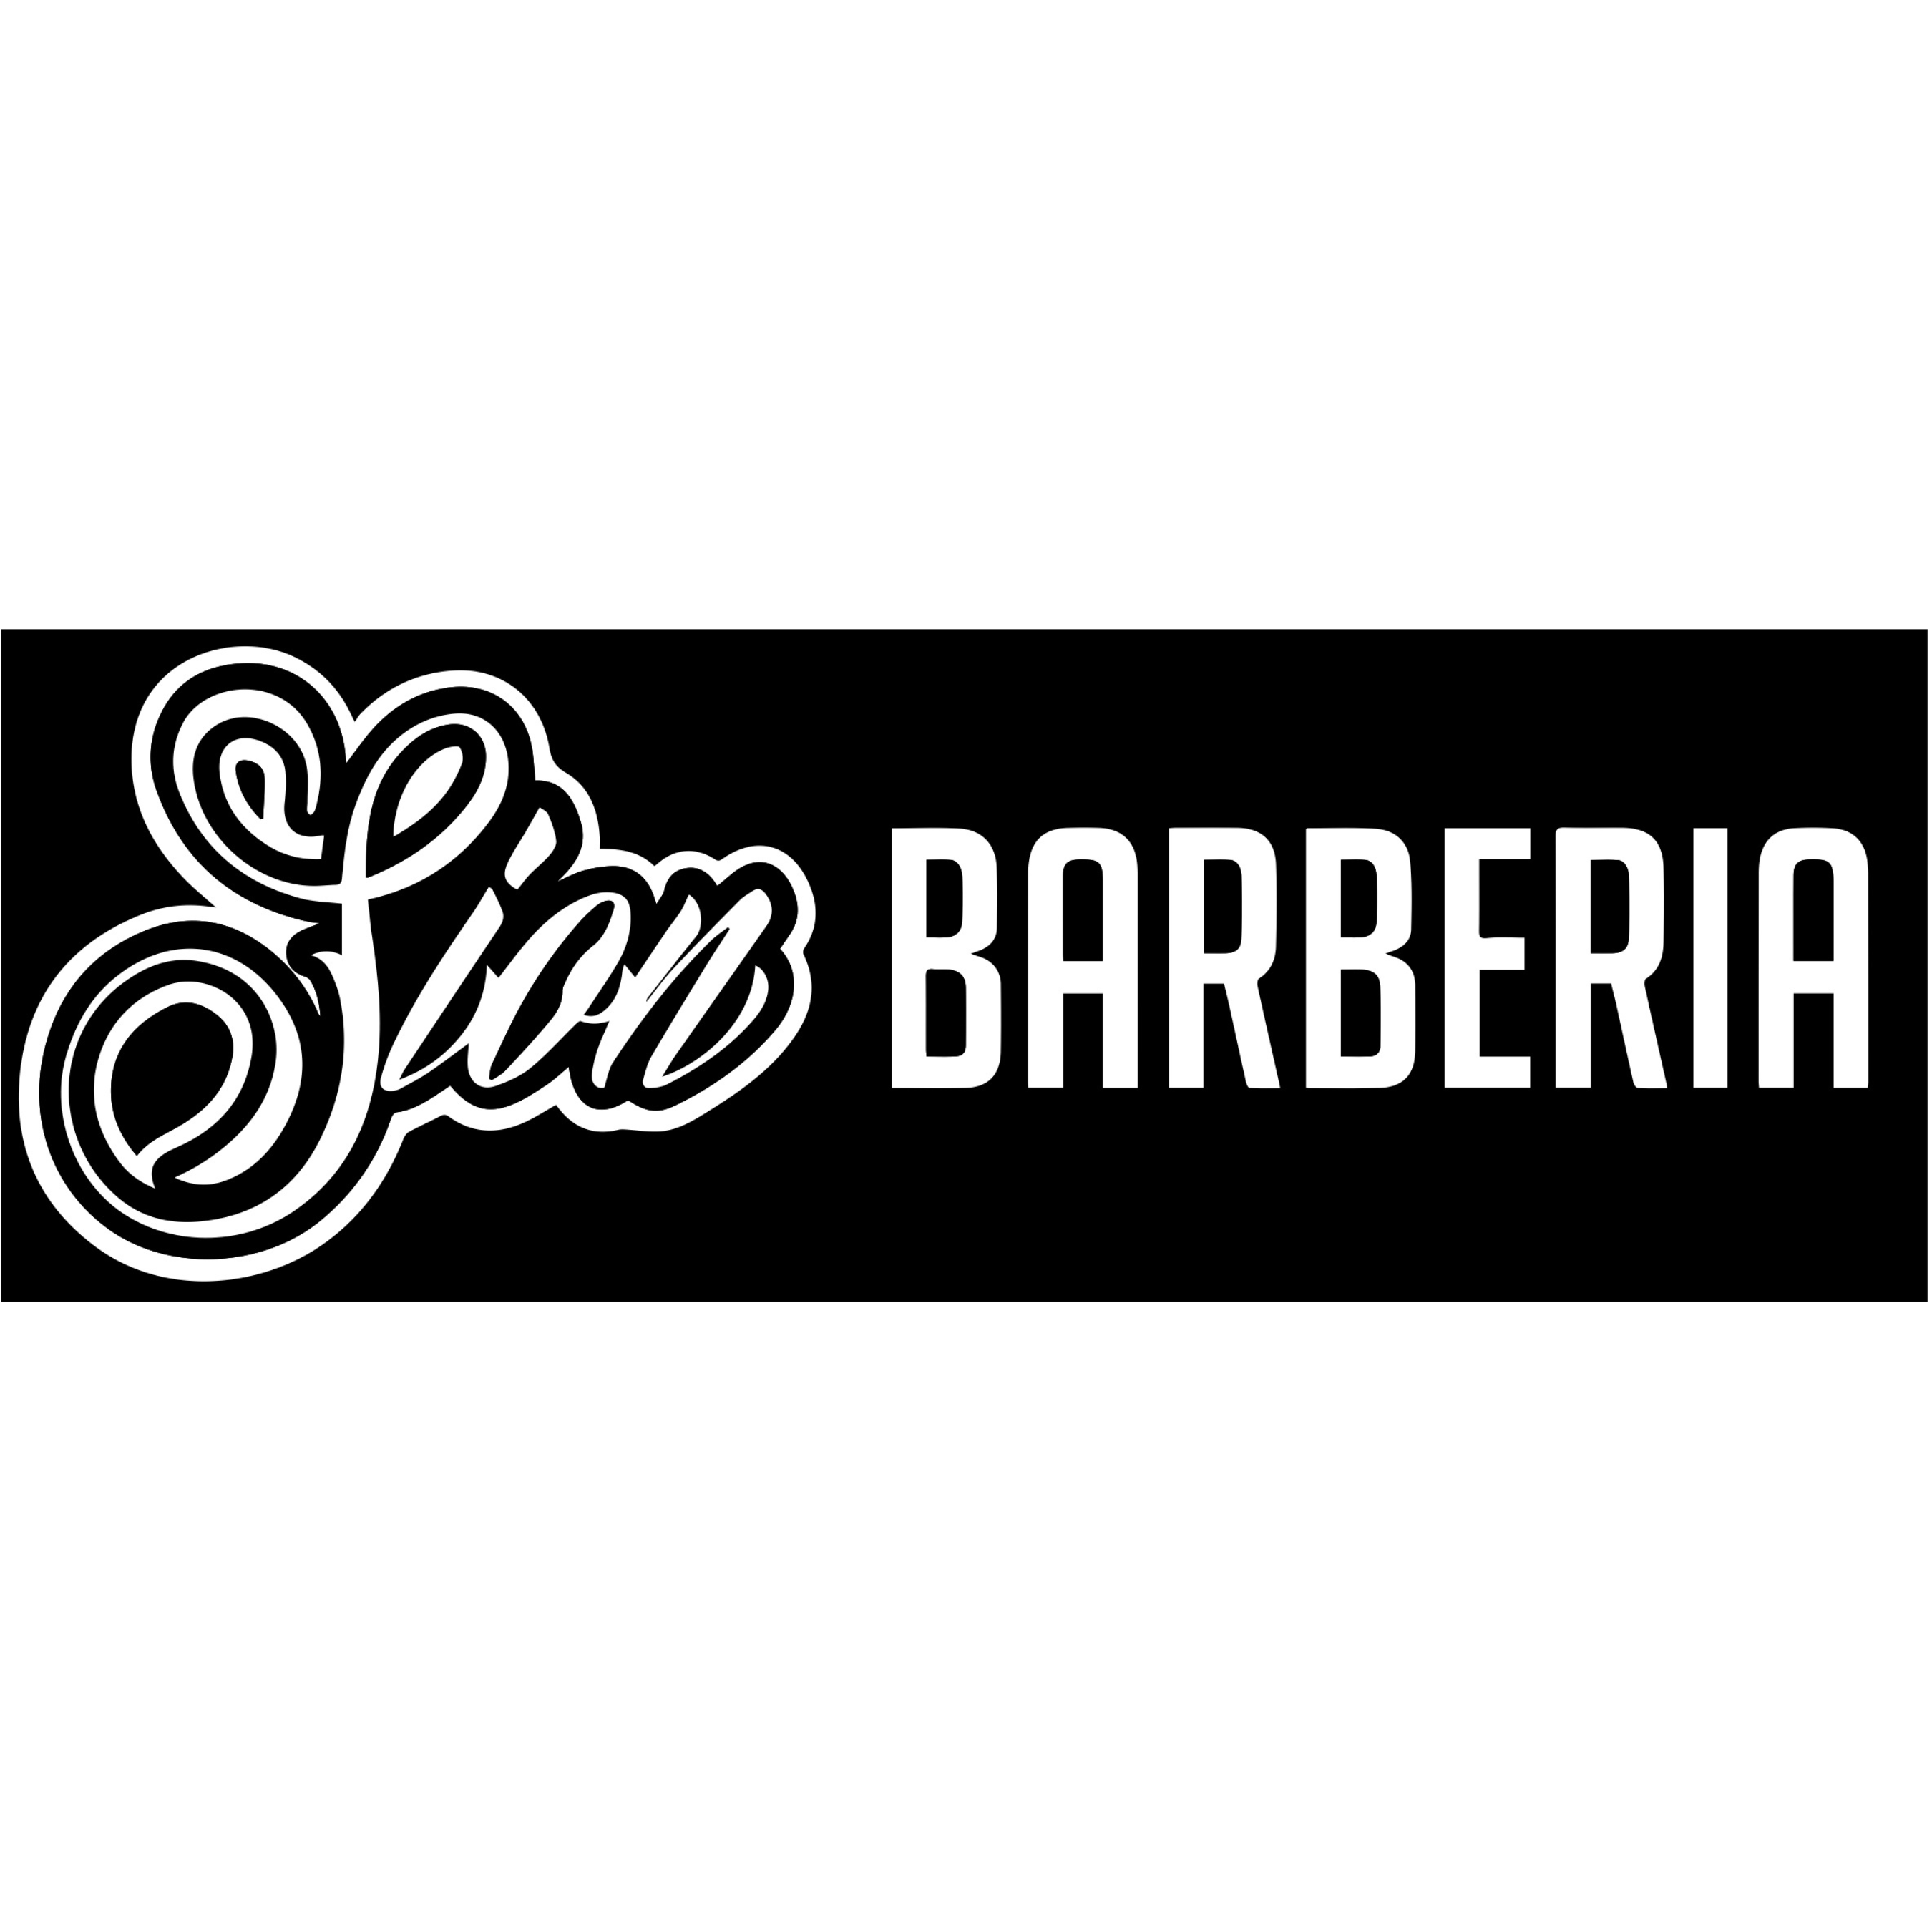 https://sdcompostela.com/wp-content/uploads/2022/11/Sion-Barberia.png